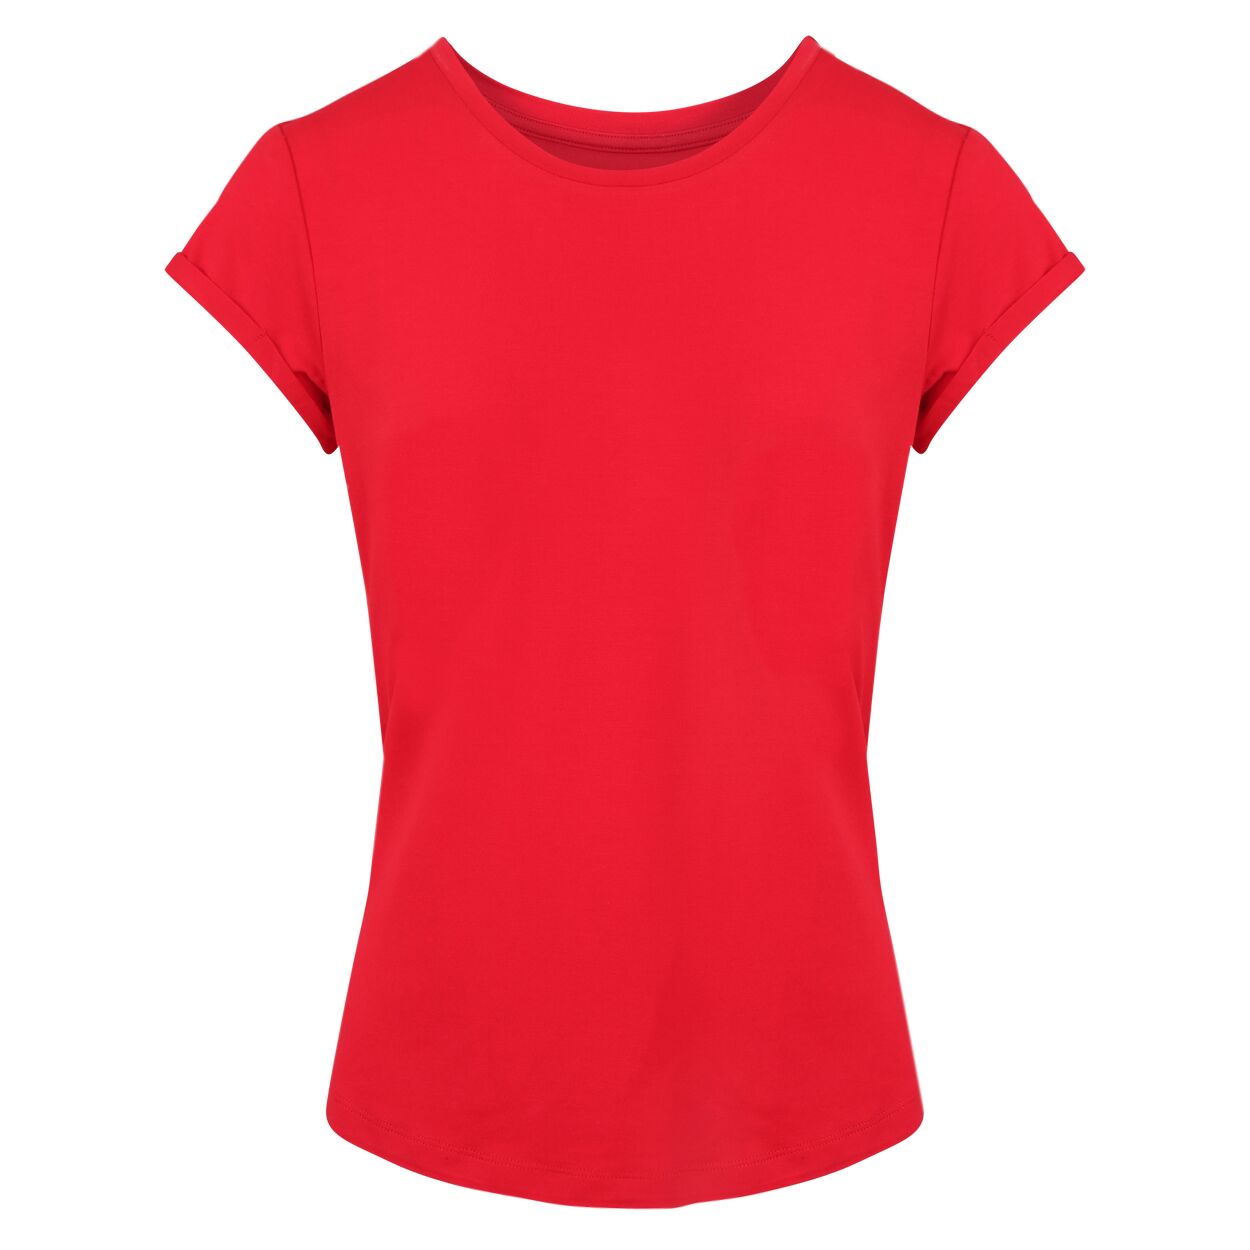 Luxe Dames Tshirt met ronde zoom - rood